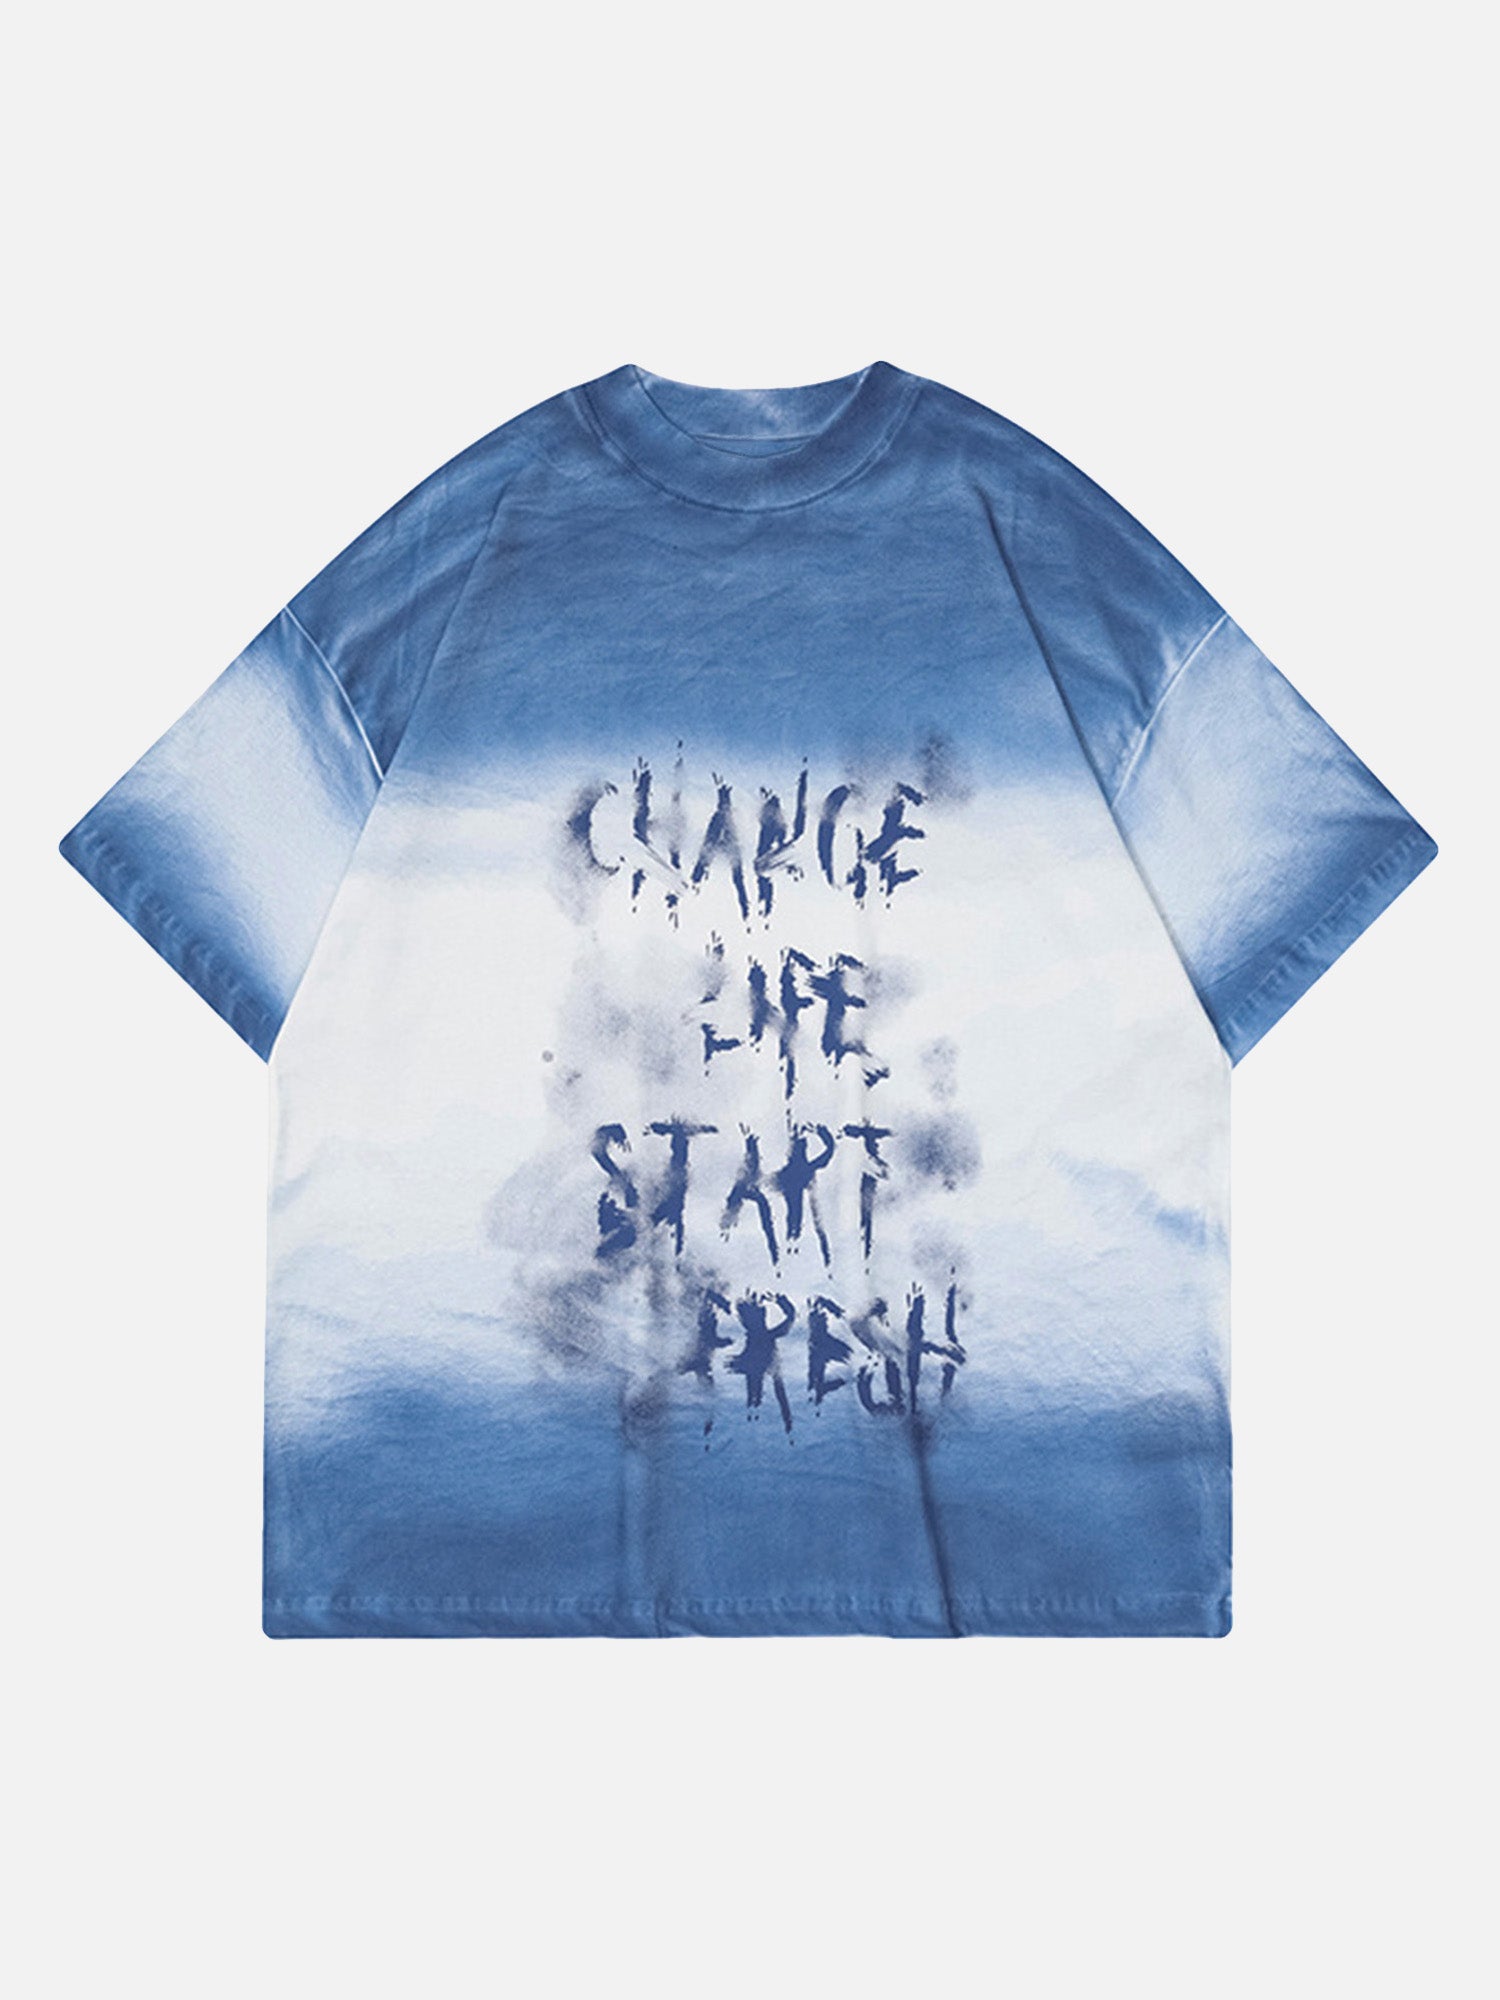 Thesupermade Street Handmade Gradient Spray Design Hip-hop T-shirt